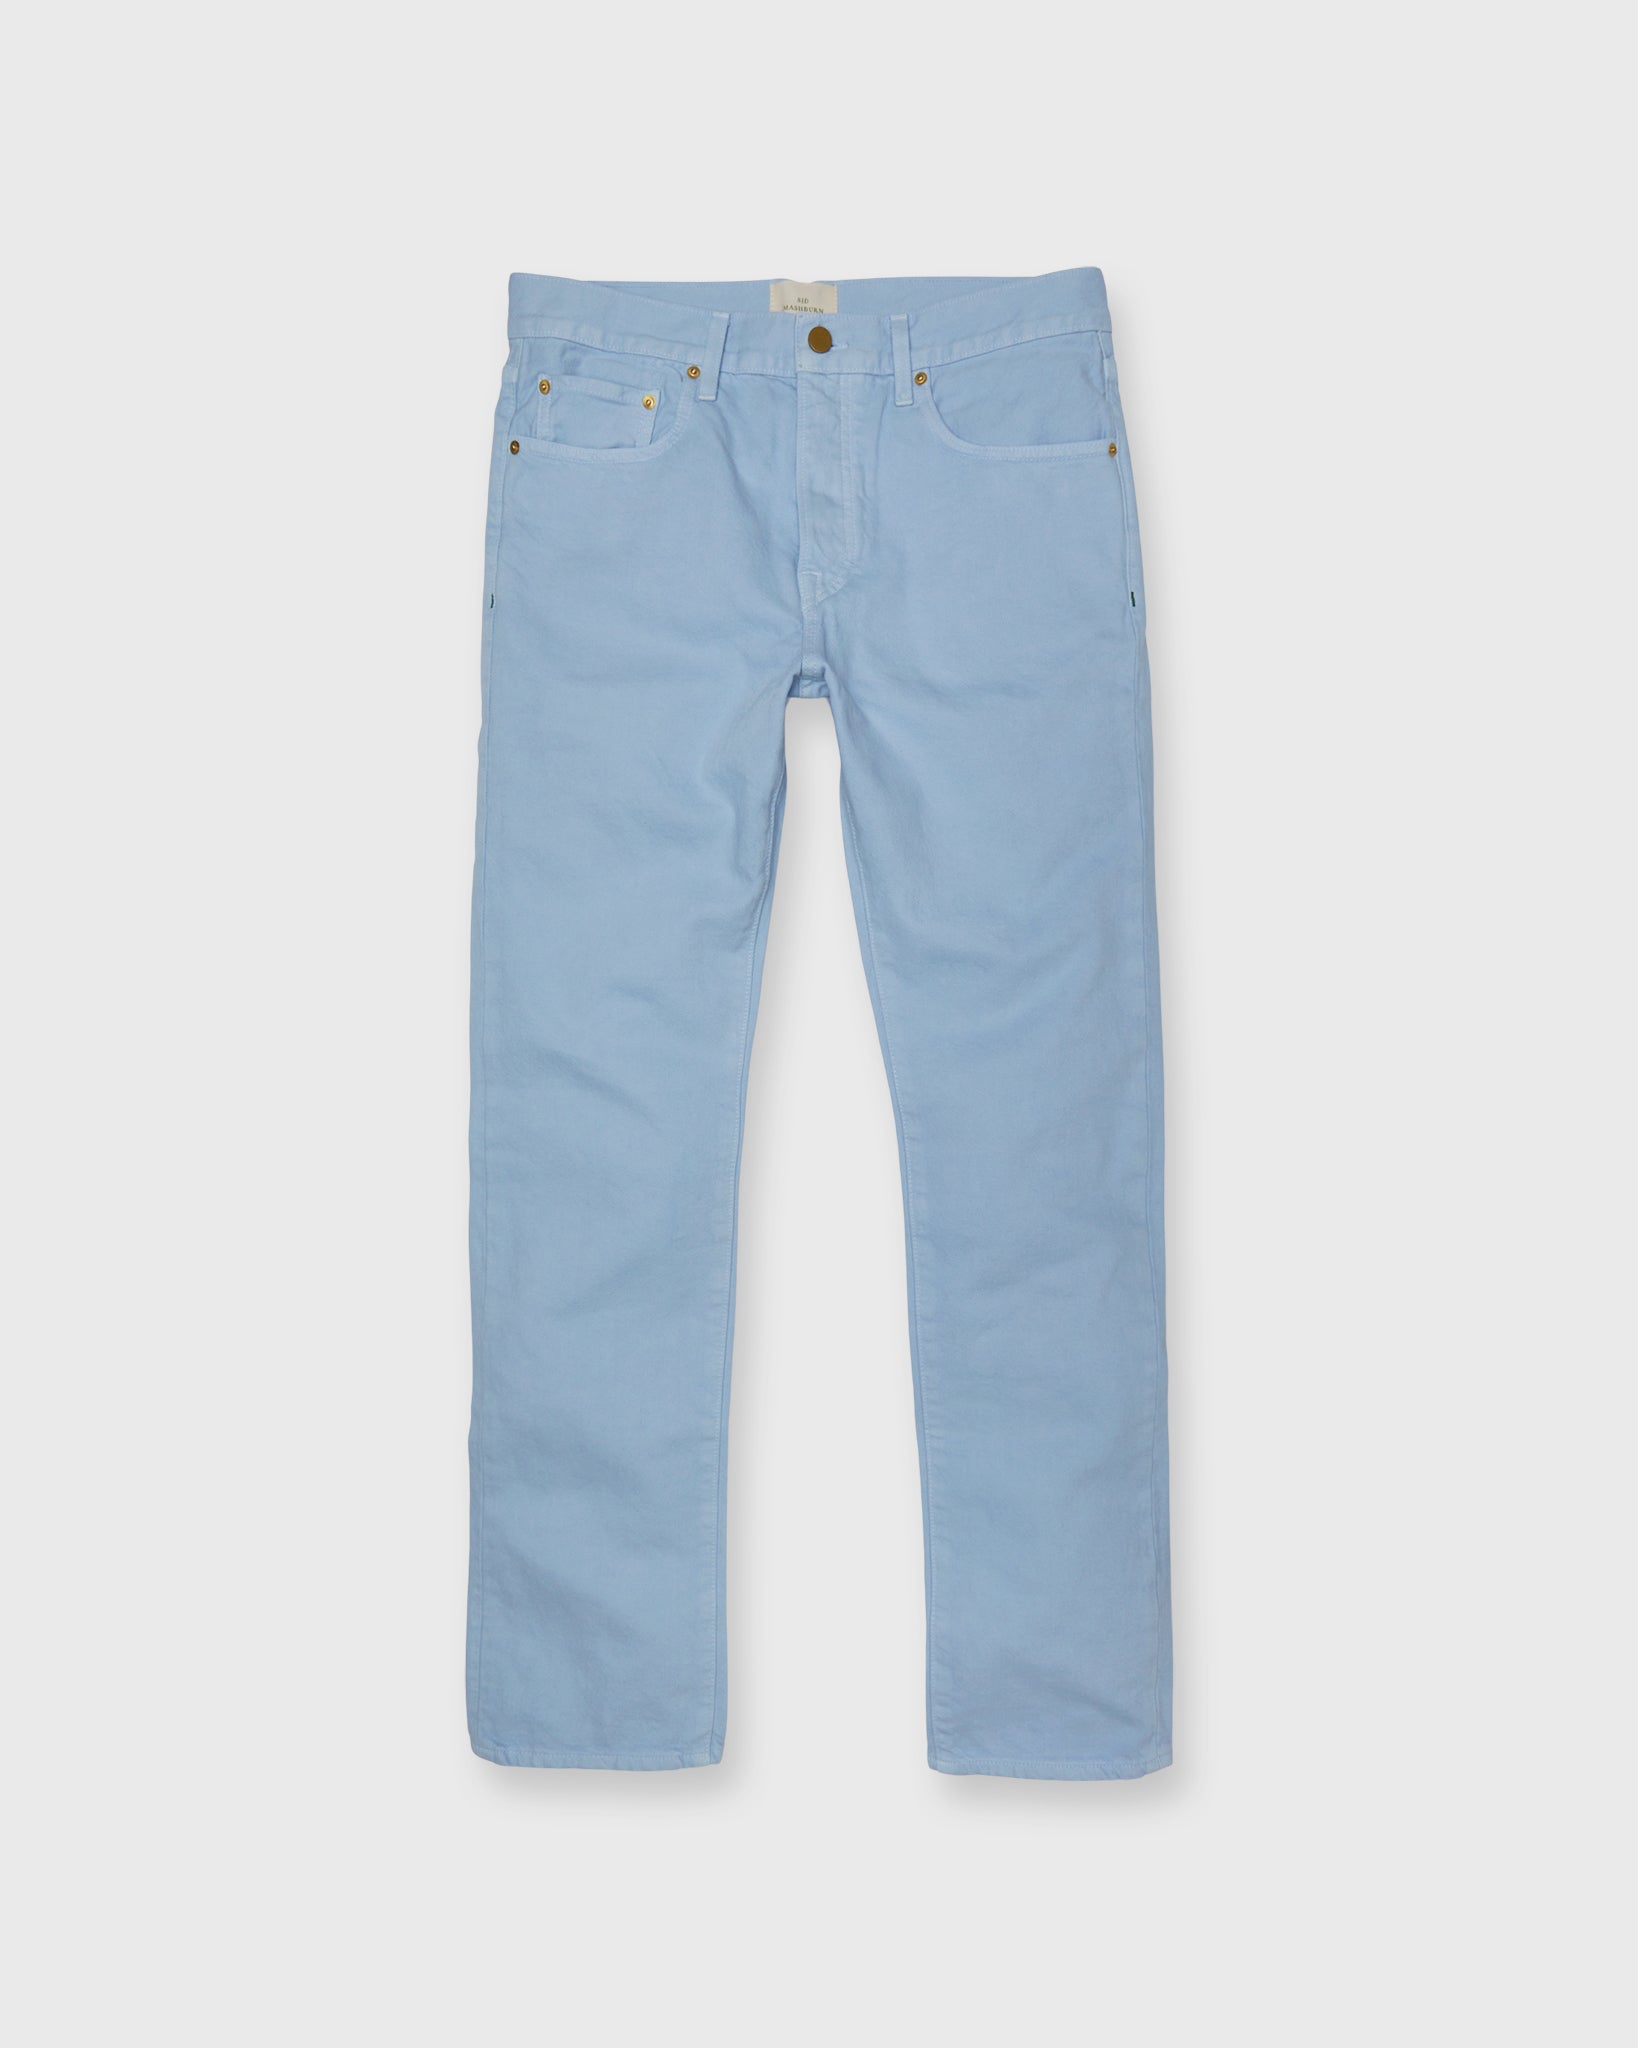 Slim Straight Jean in Pale Blue Garment-Dyed Denim